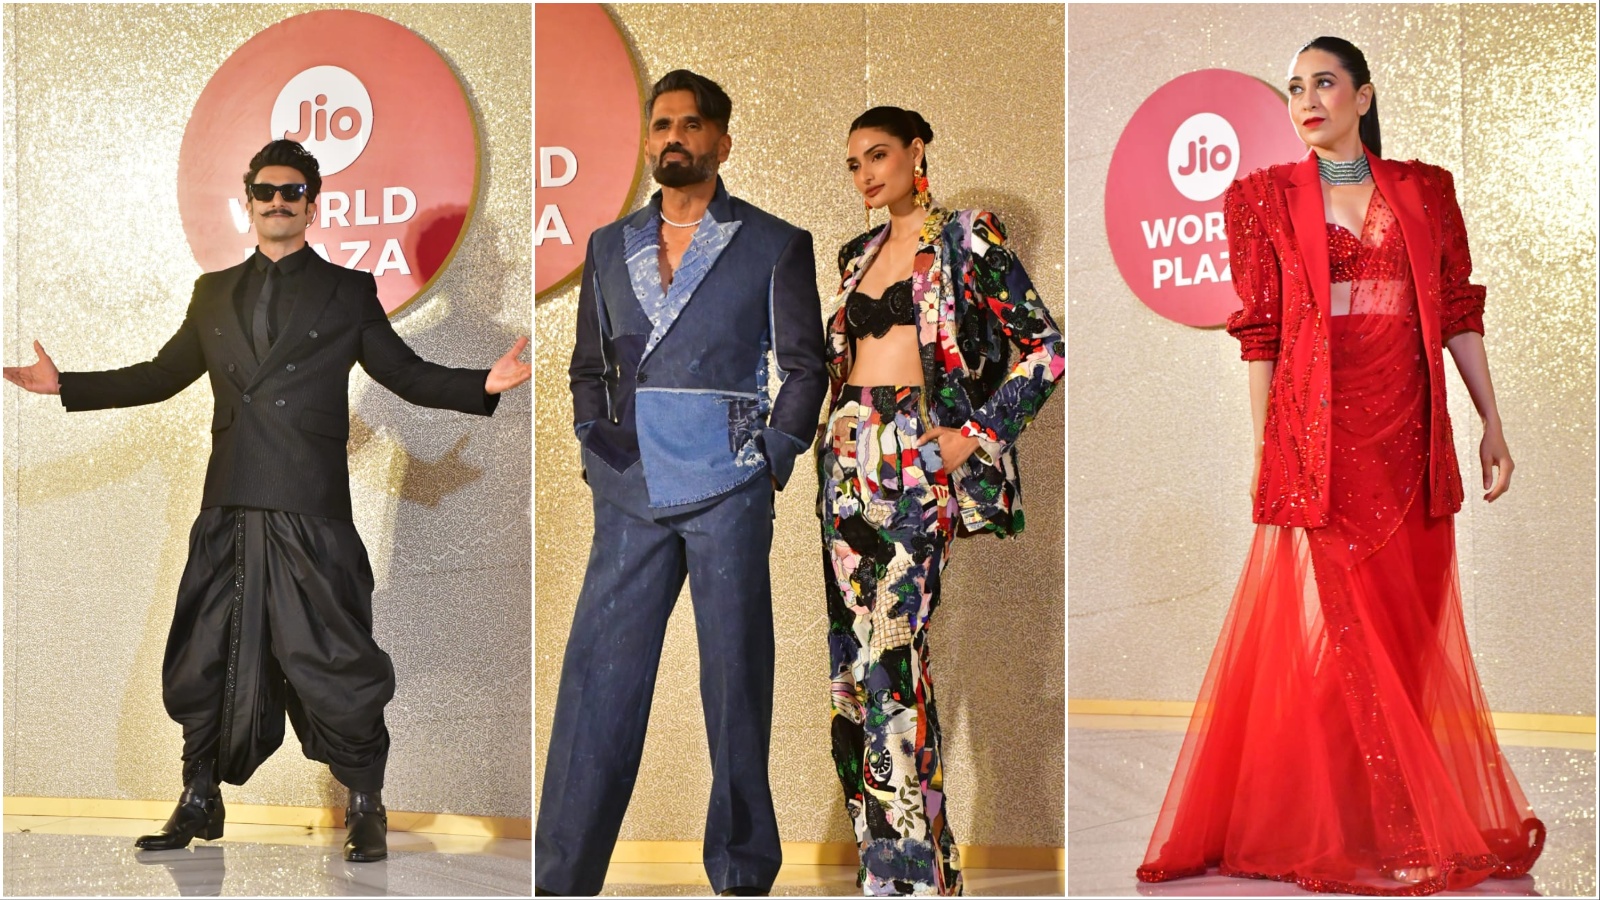 Mukesh Ambani laughs as Ranveer Singh tells 'bhabhi' Nita Ambani, 'Just  looking like a wow'. Watch highlights from Jio World Plaza event |  Bollywood News - The Indian Express